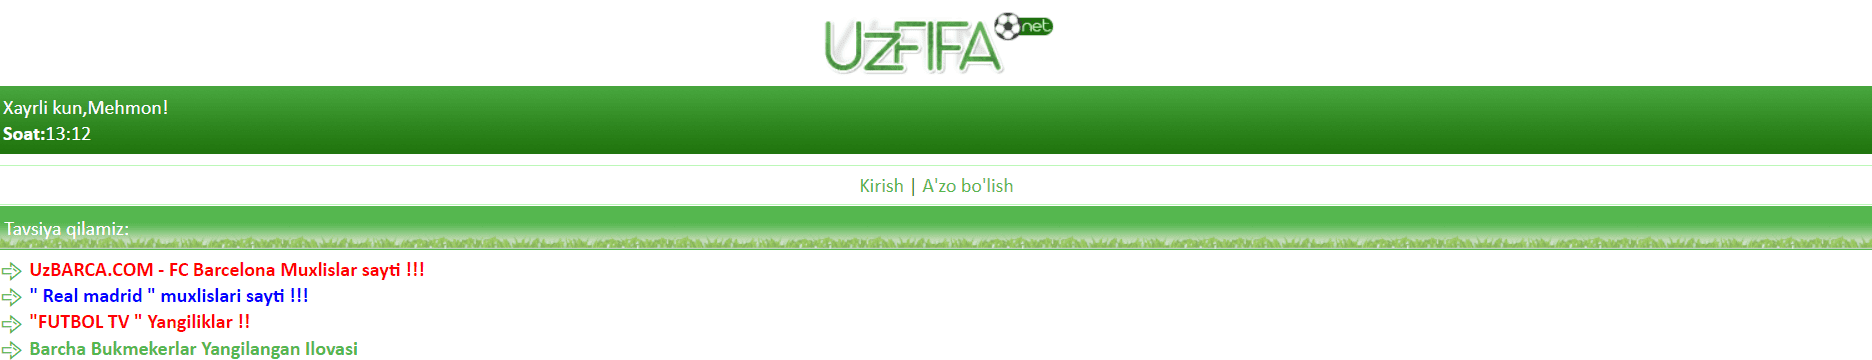 UzFIFA.NET